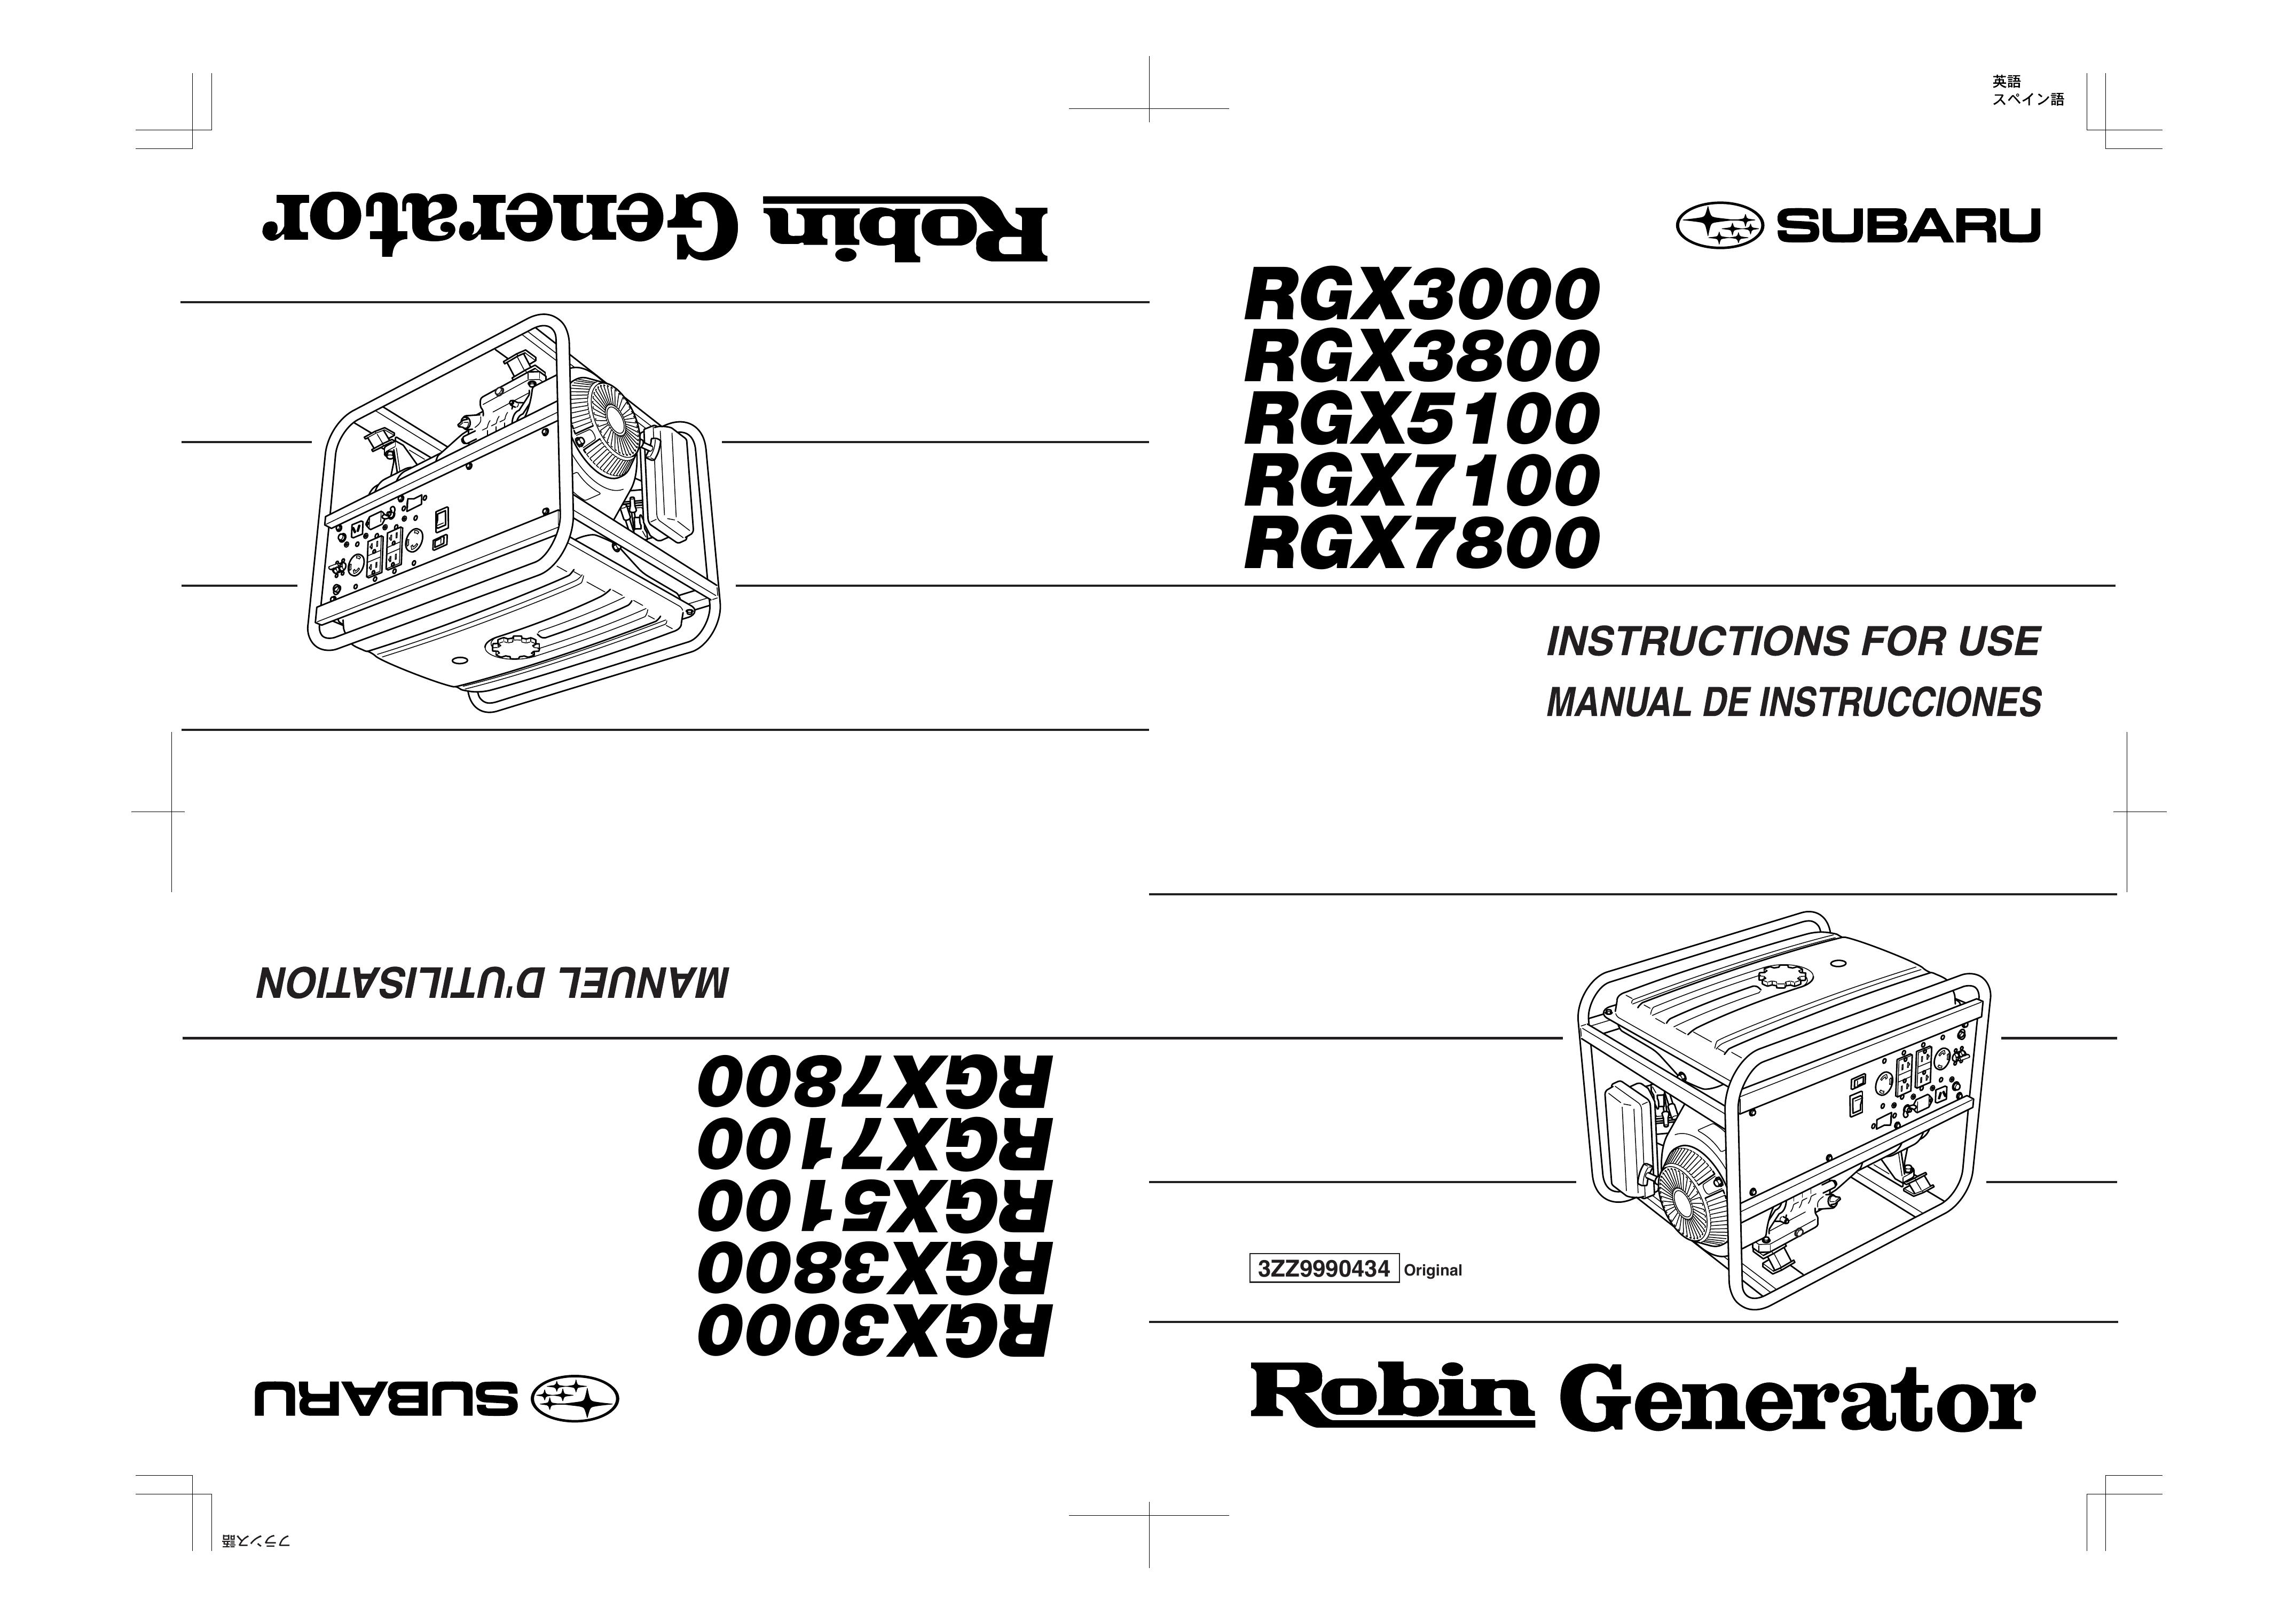 Subaru RGX7800 Portable Generator User Manual